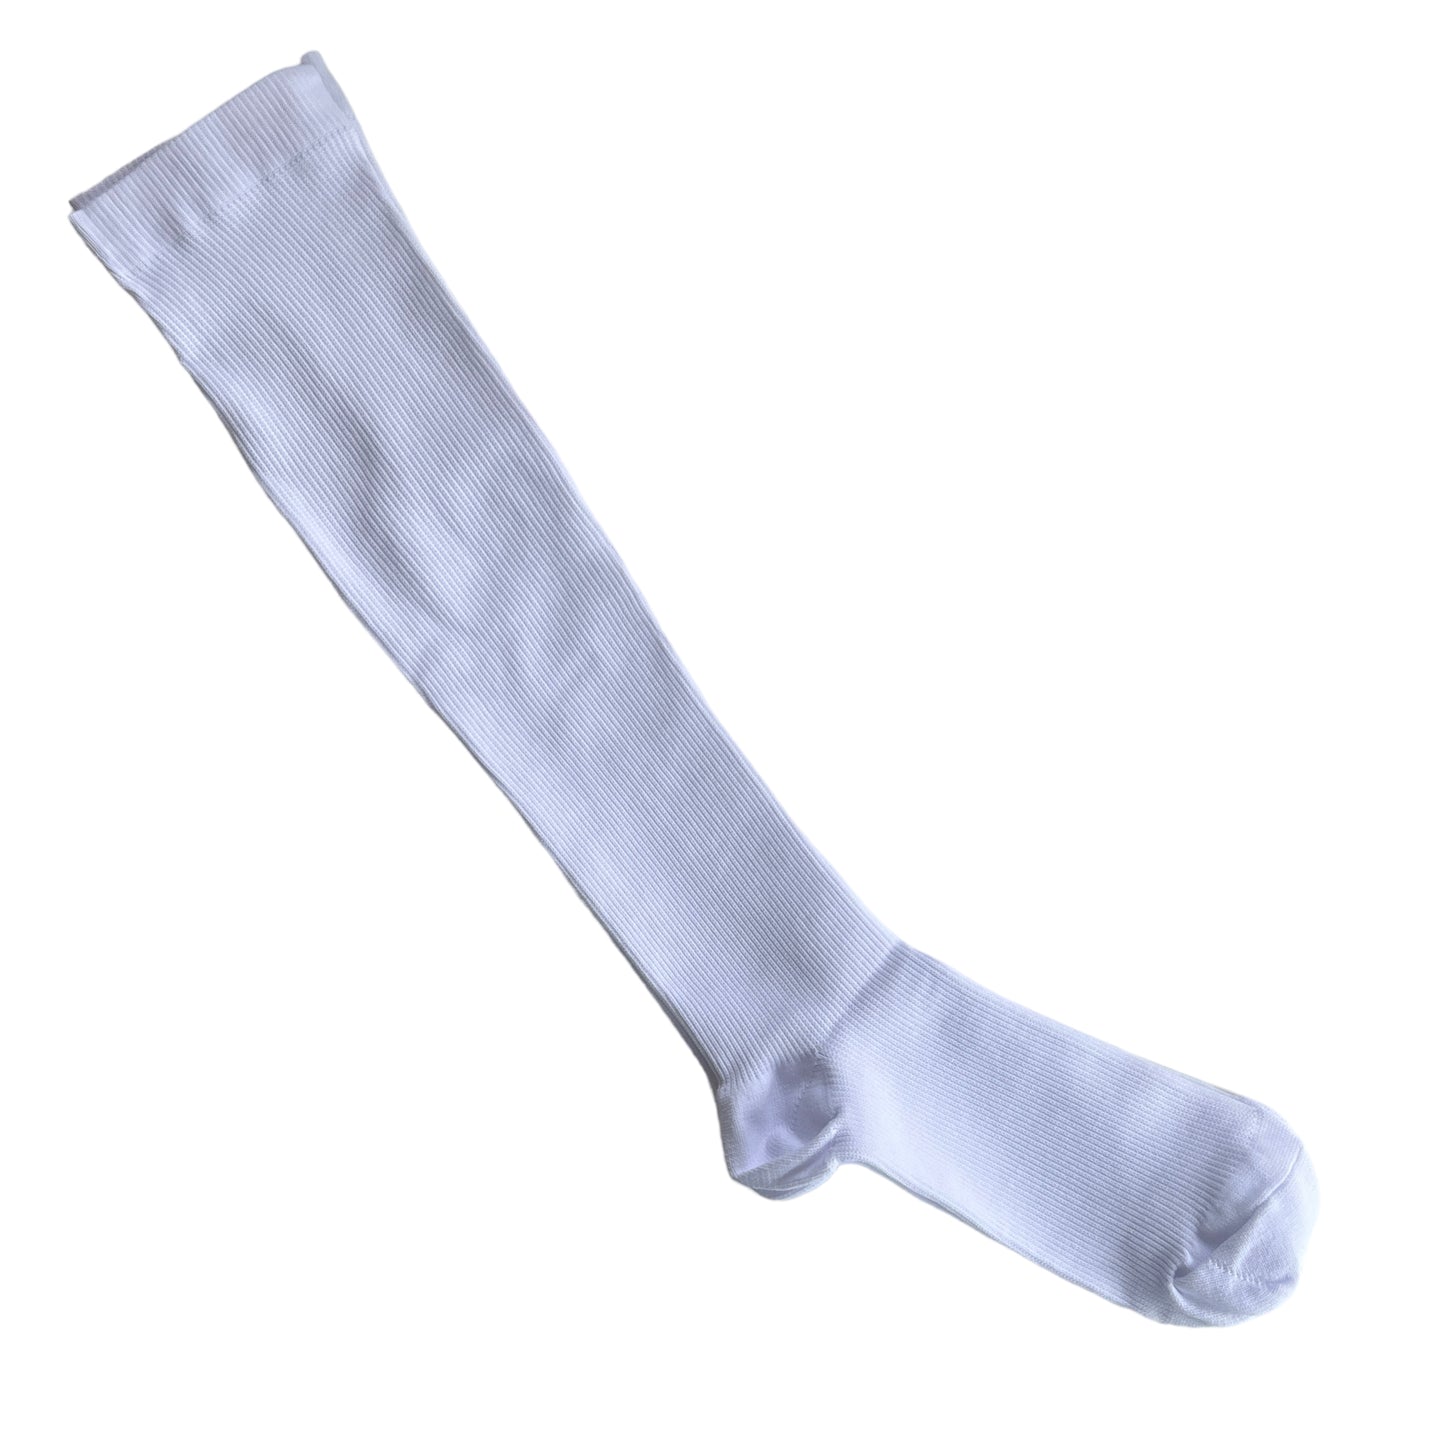 Nursing Compression Socks - Plain